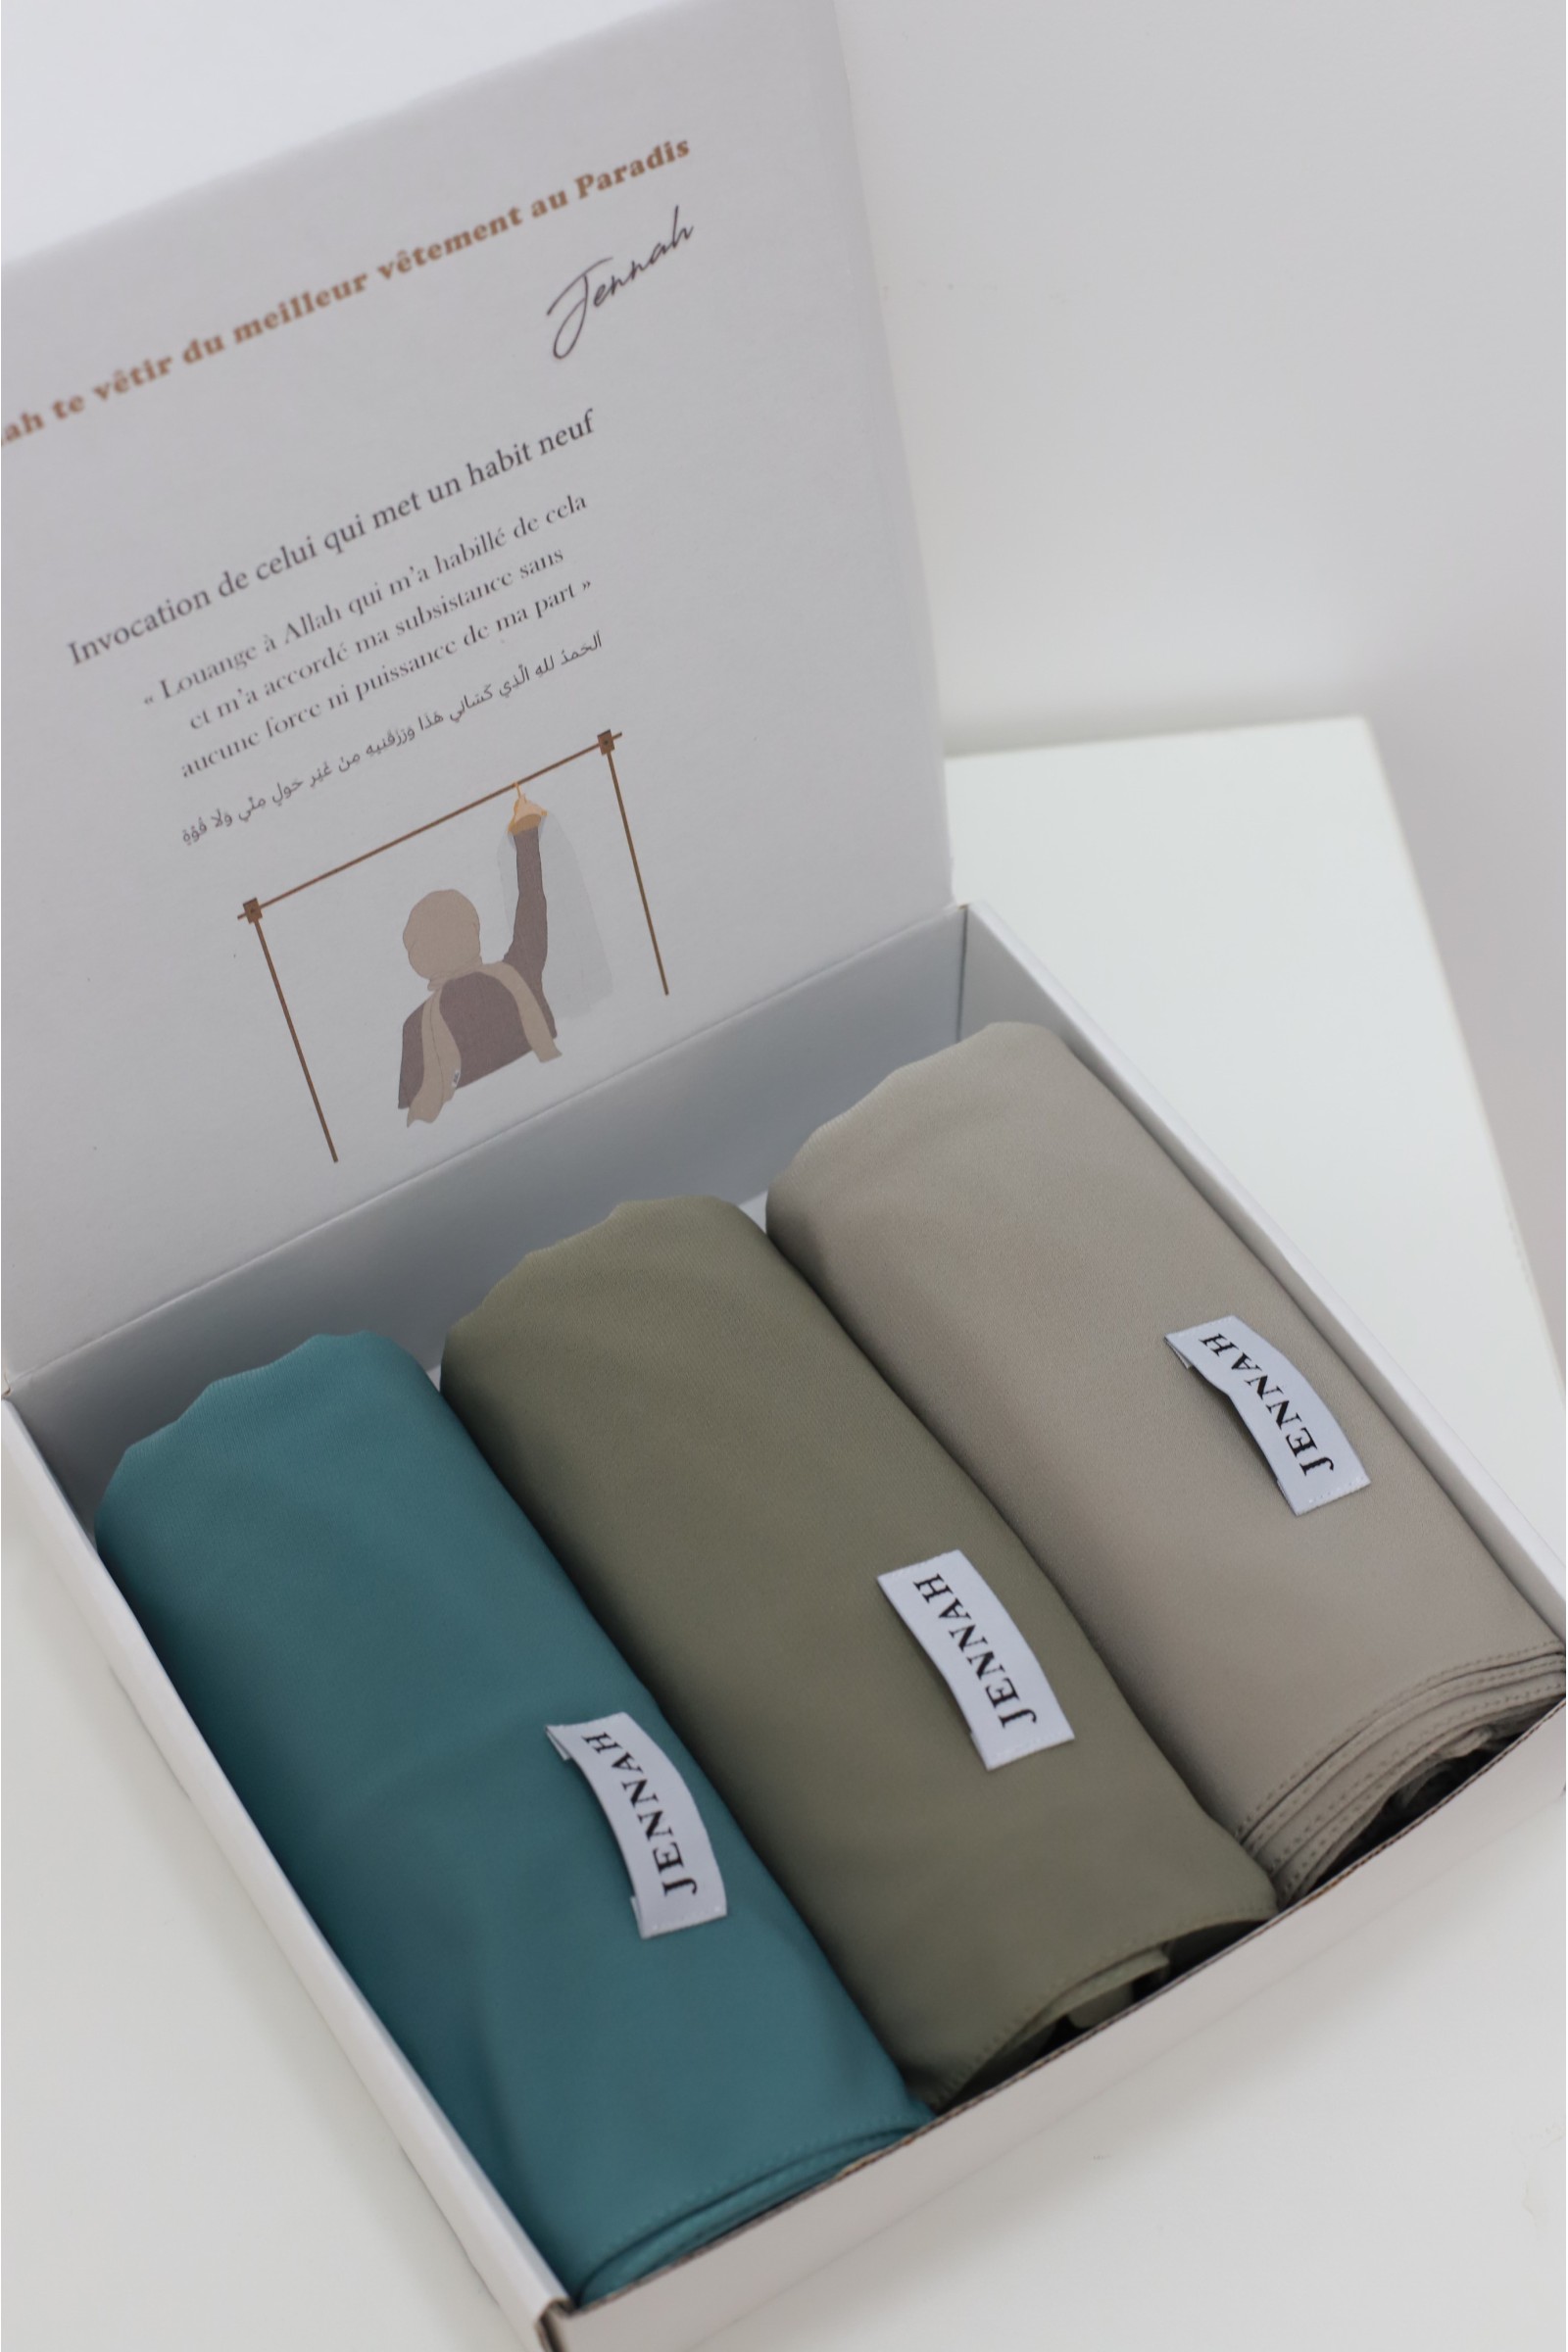 Hijab box for veiled Muslim women, veil box to offer women